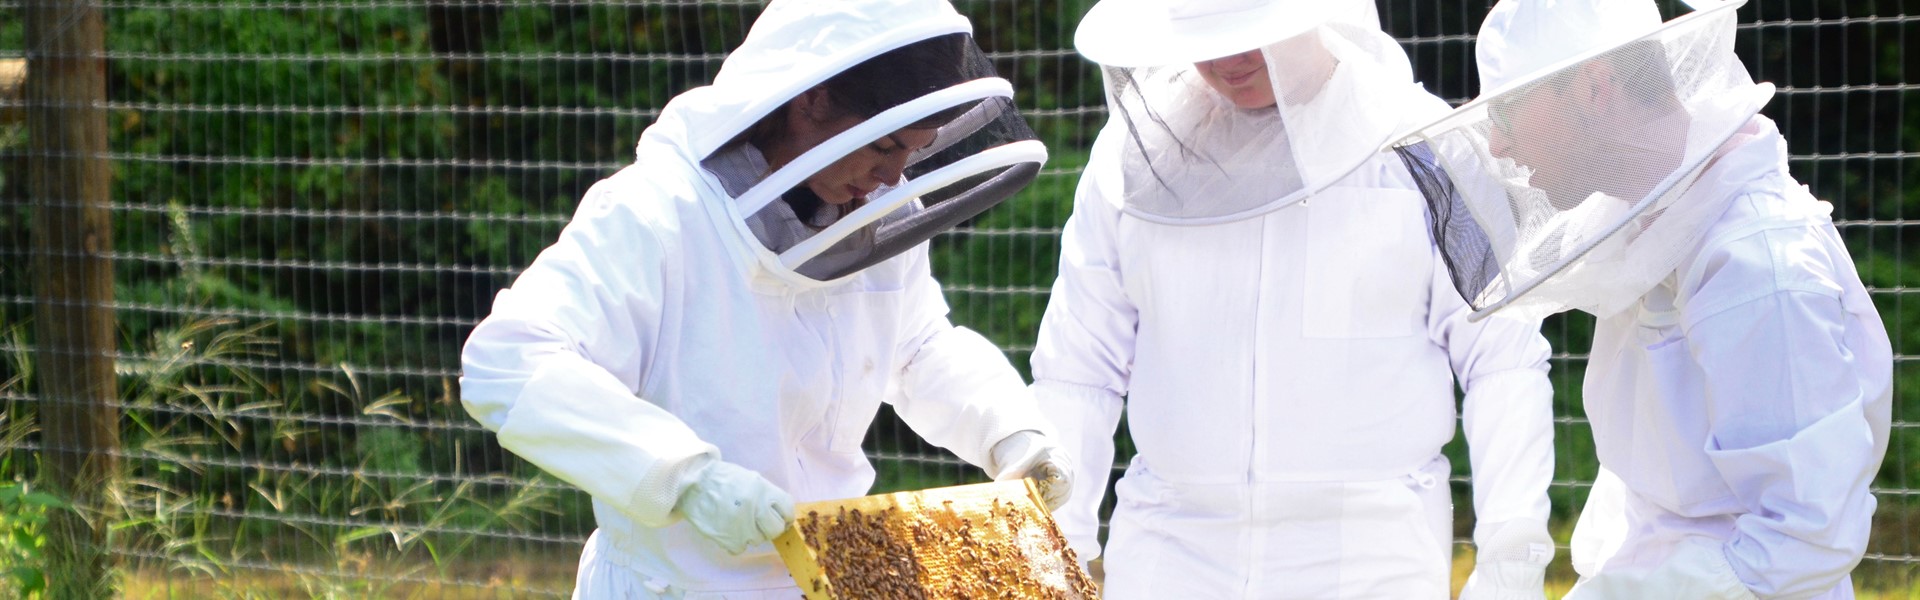 TCCHS "bees raising bees"